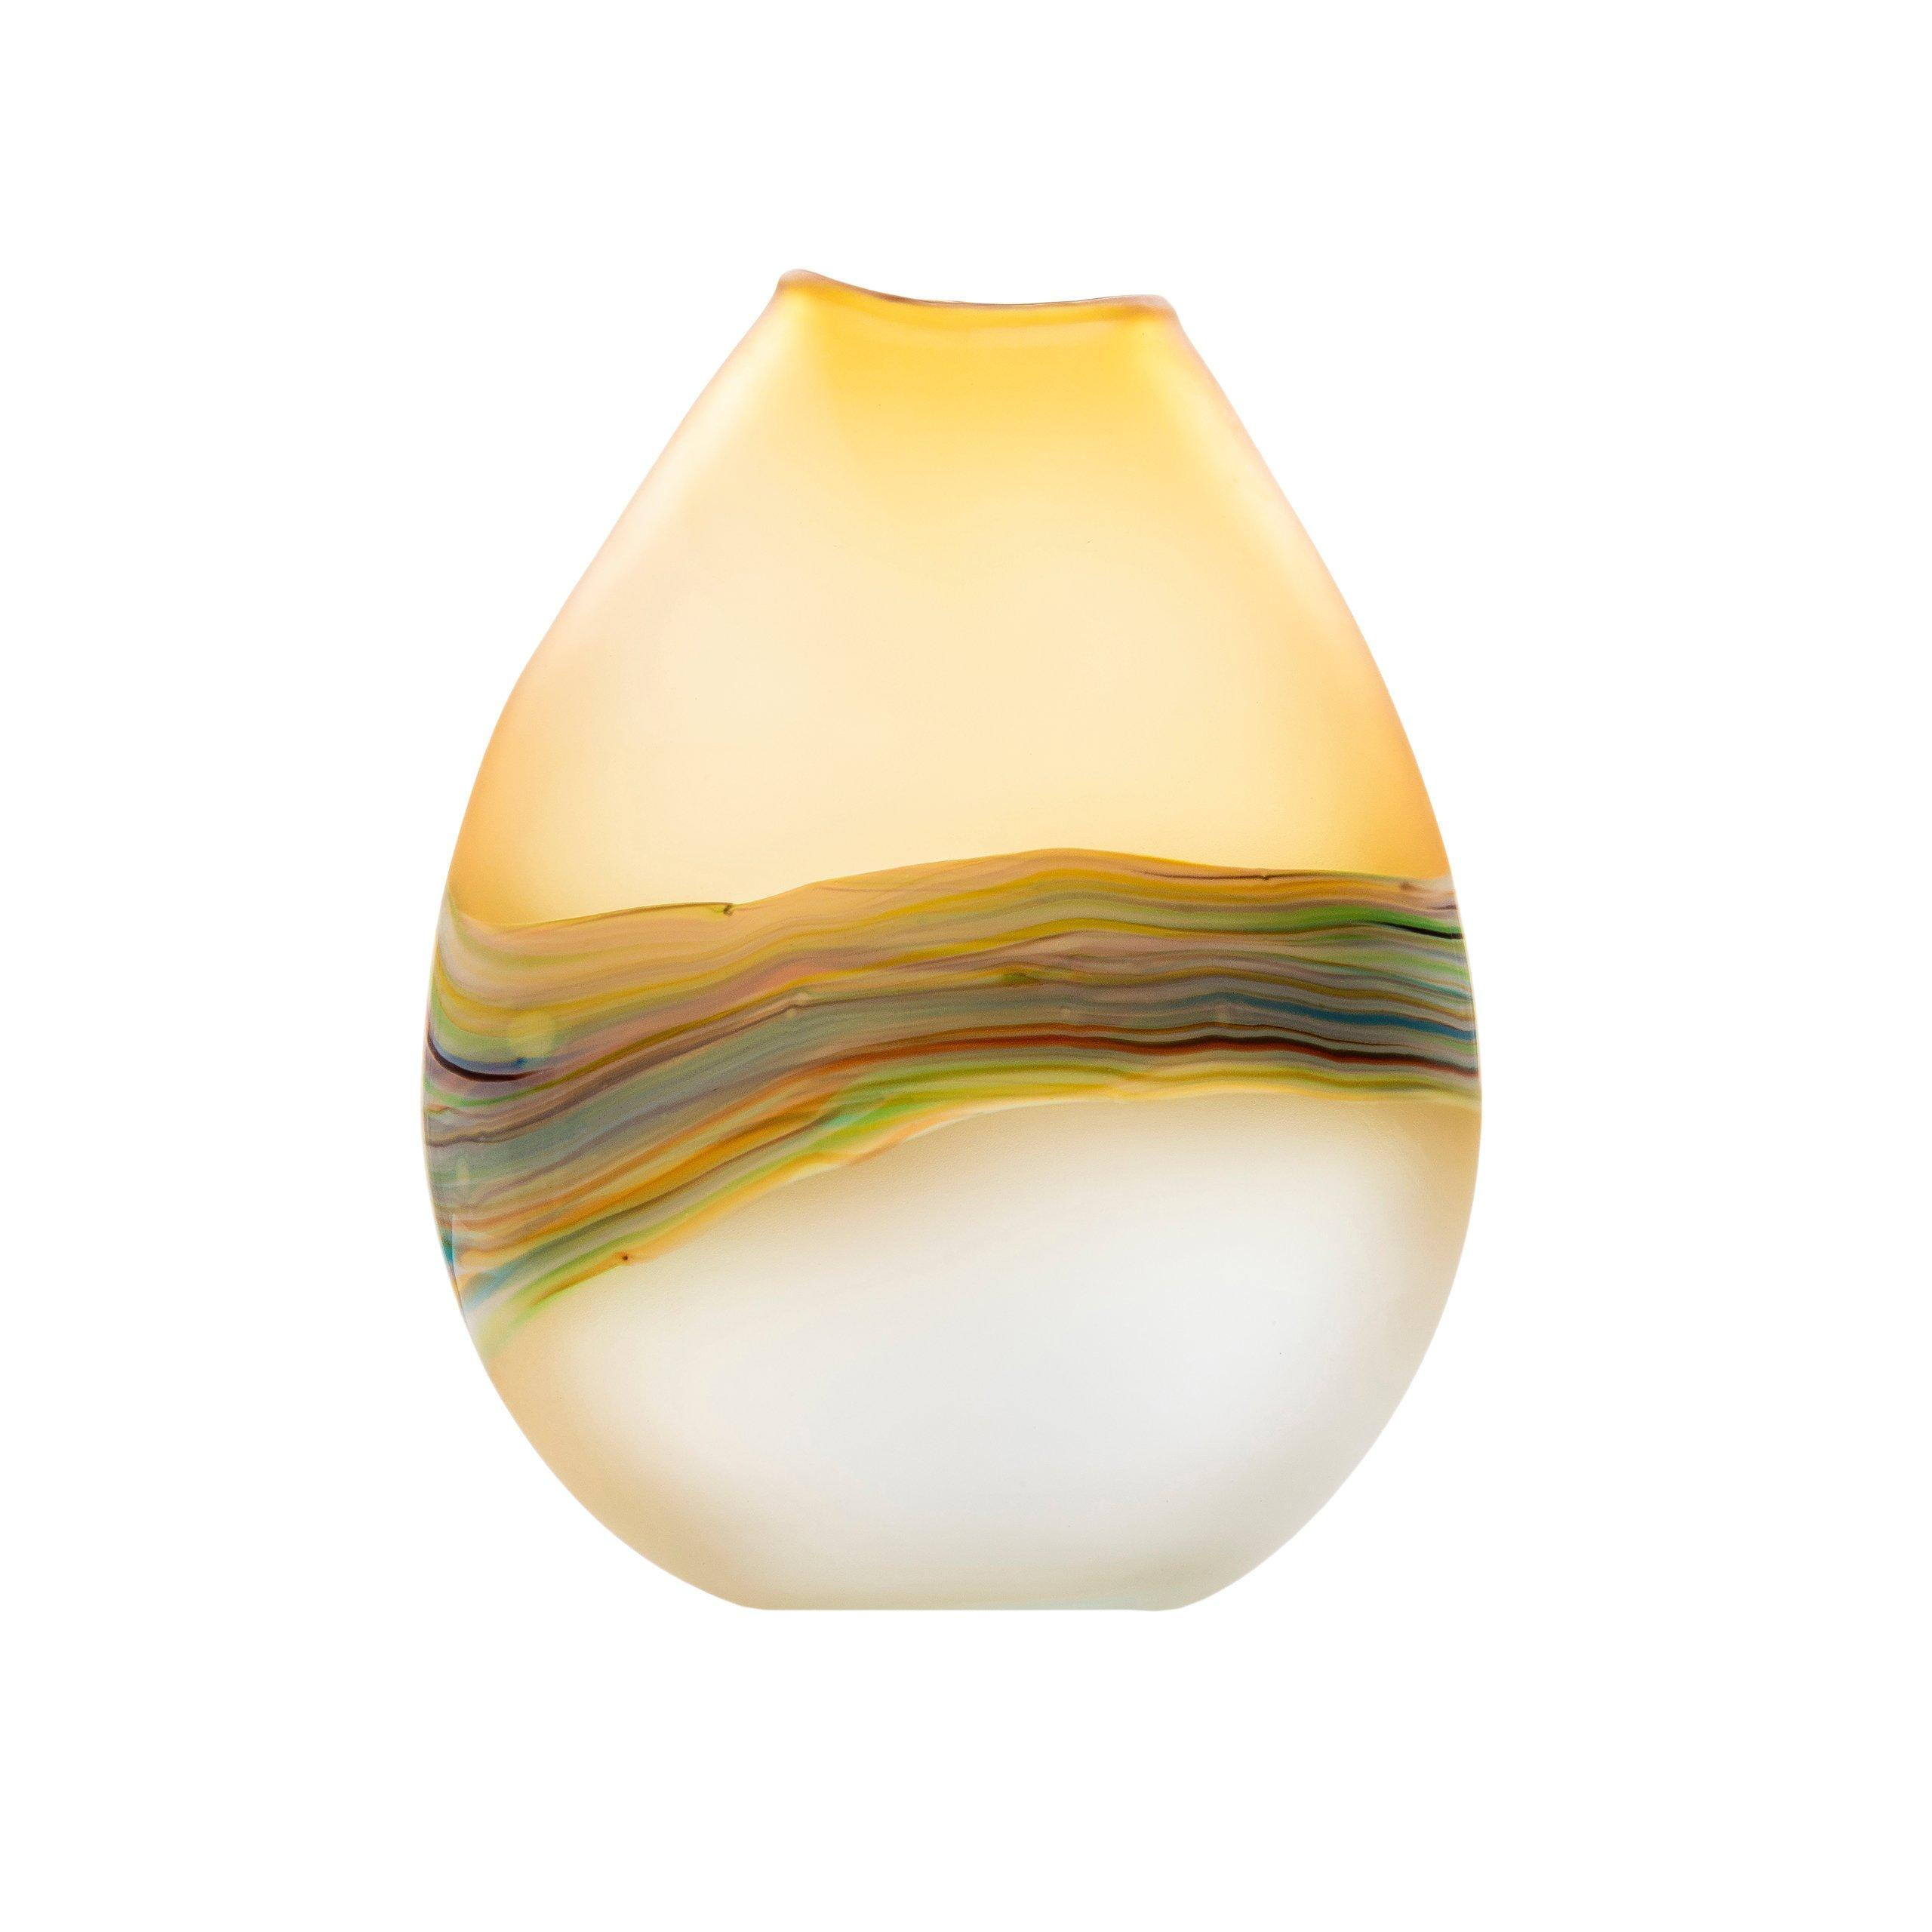 Lucius Hand-Blown Glass Vase - image 1